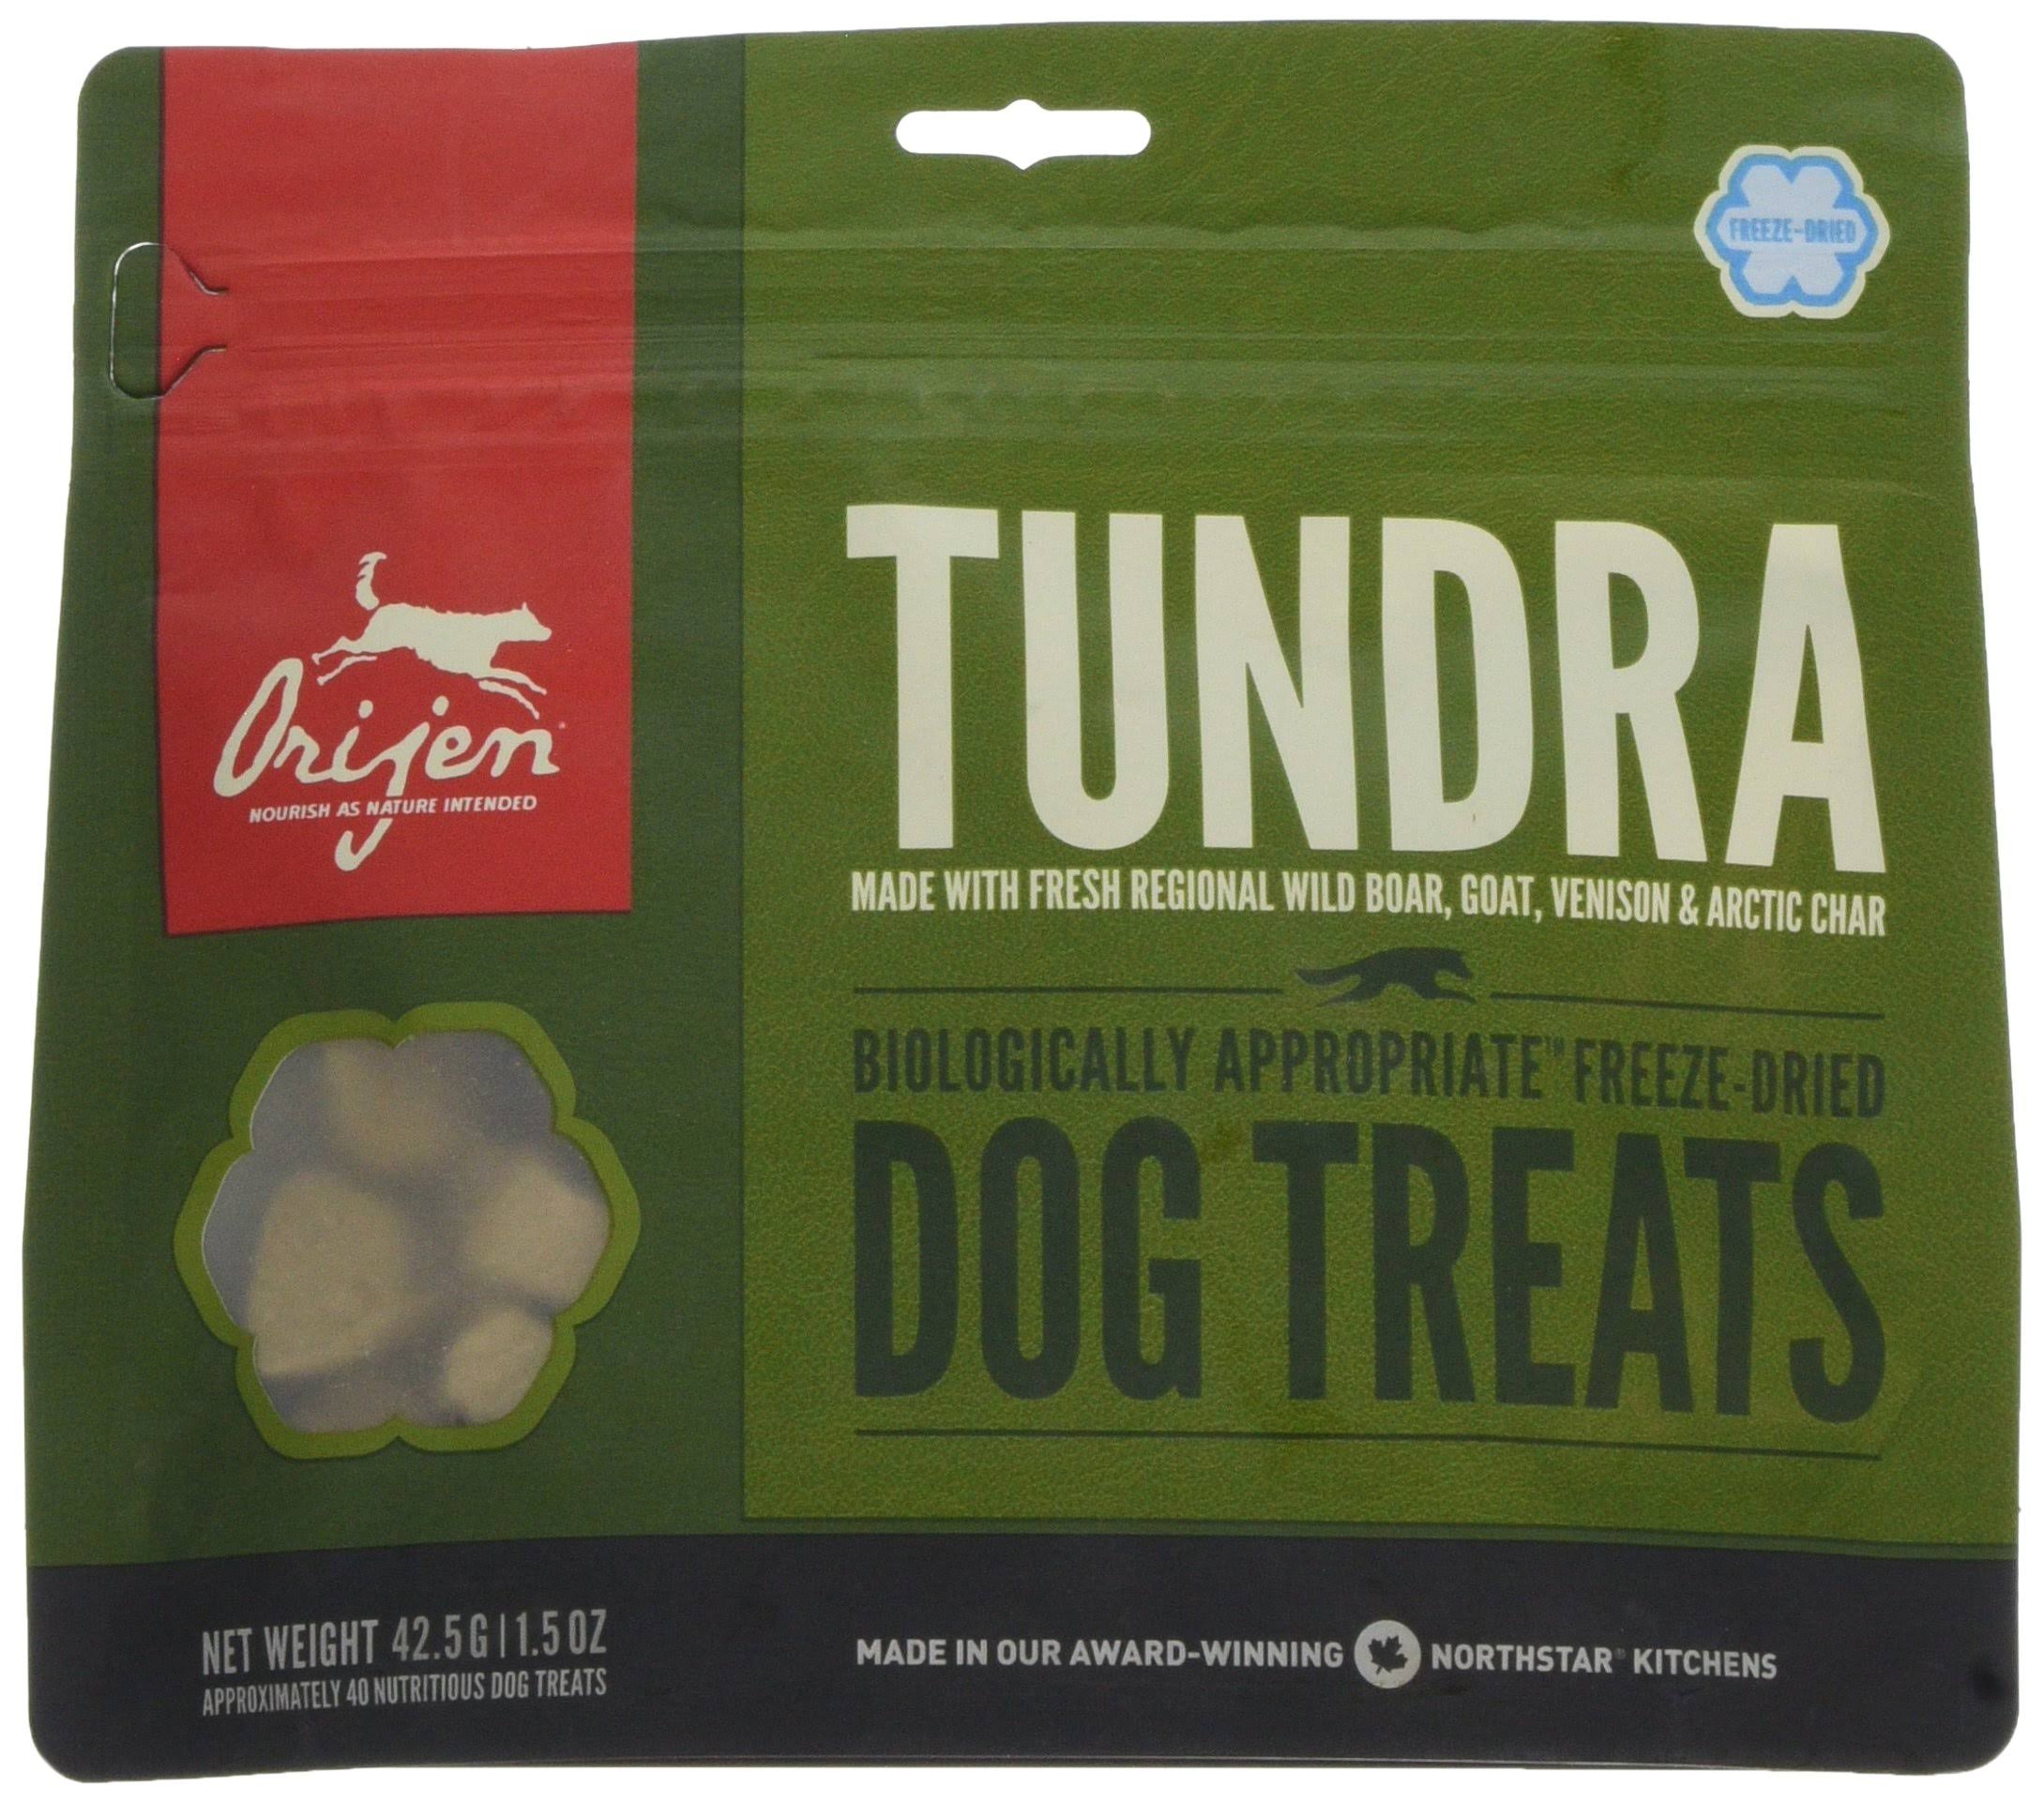 Orijen Tundra Dog Treat, 42.5 G